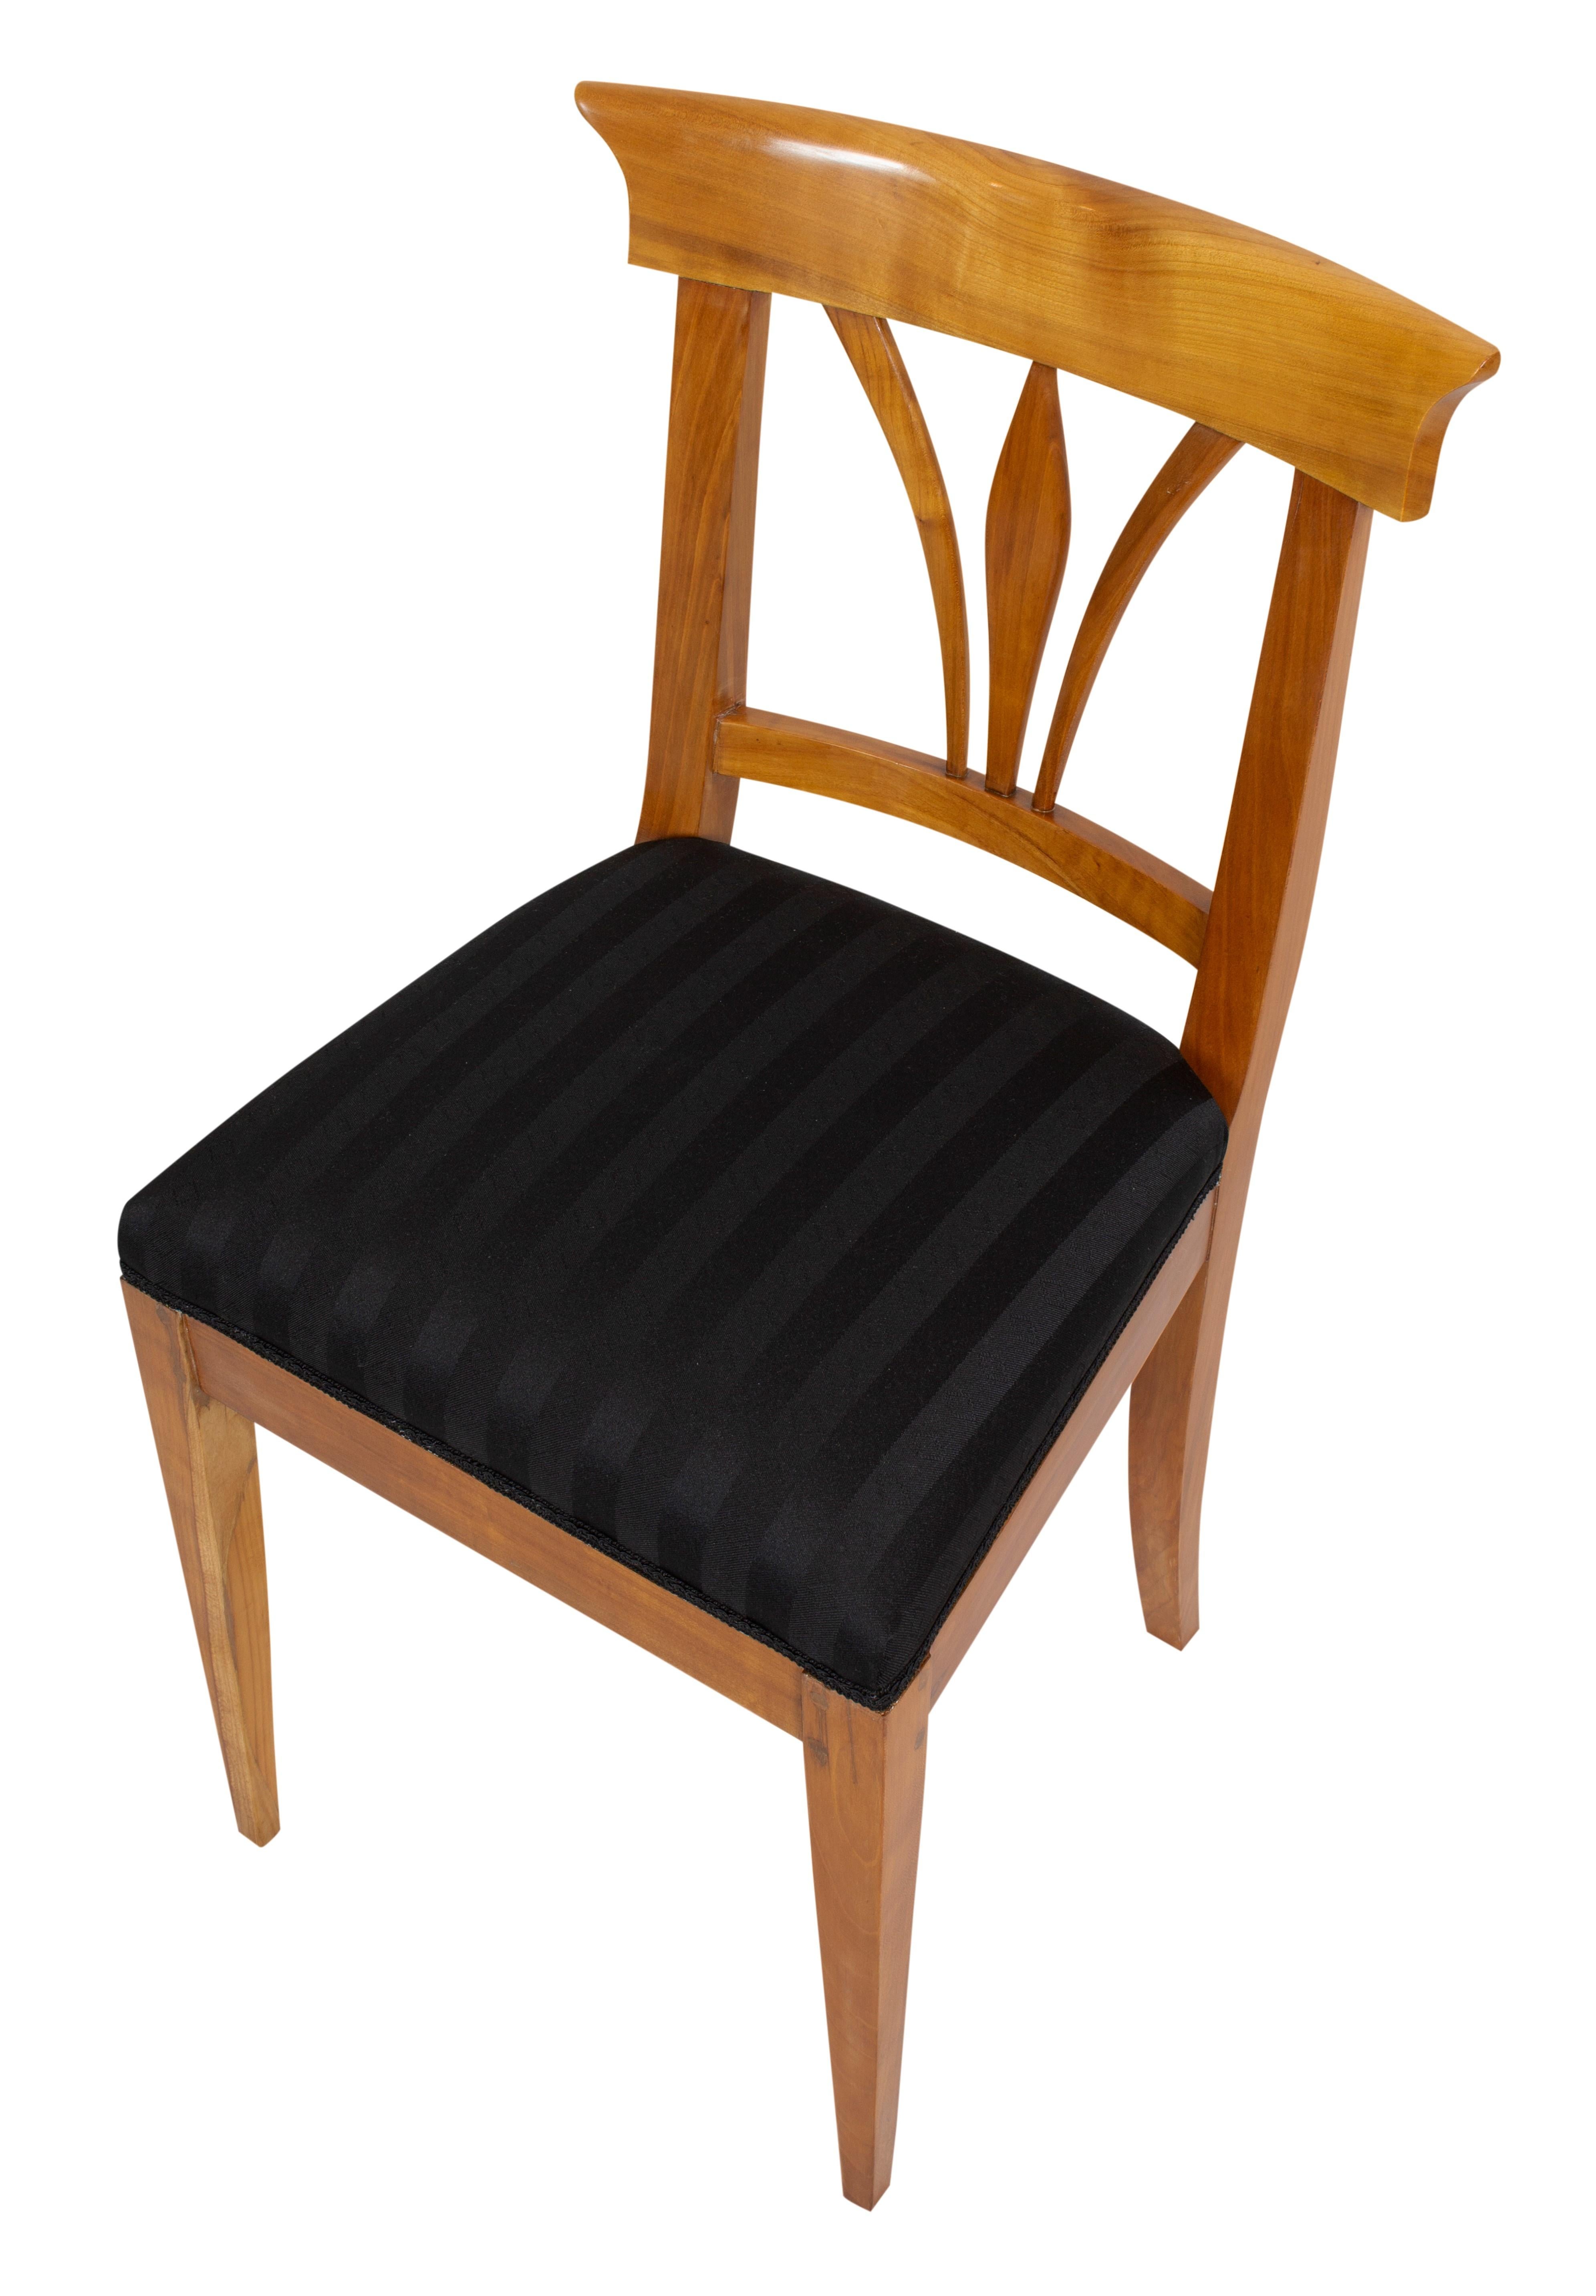 19th Century Biedermeier Cherrywood Chair In Good Condition For Sale In Darmstadt, DE